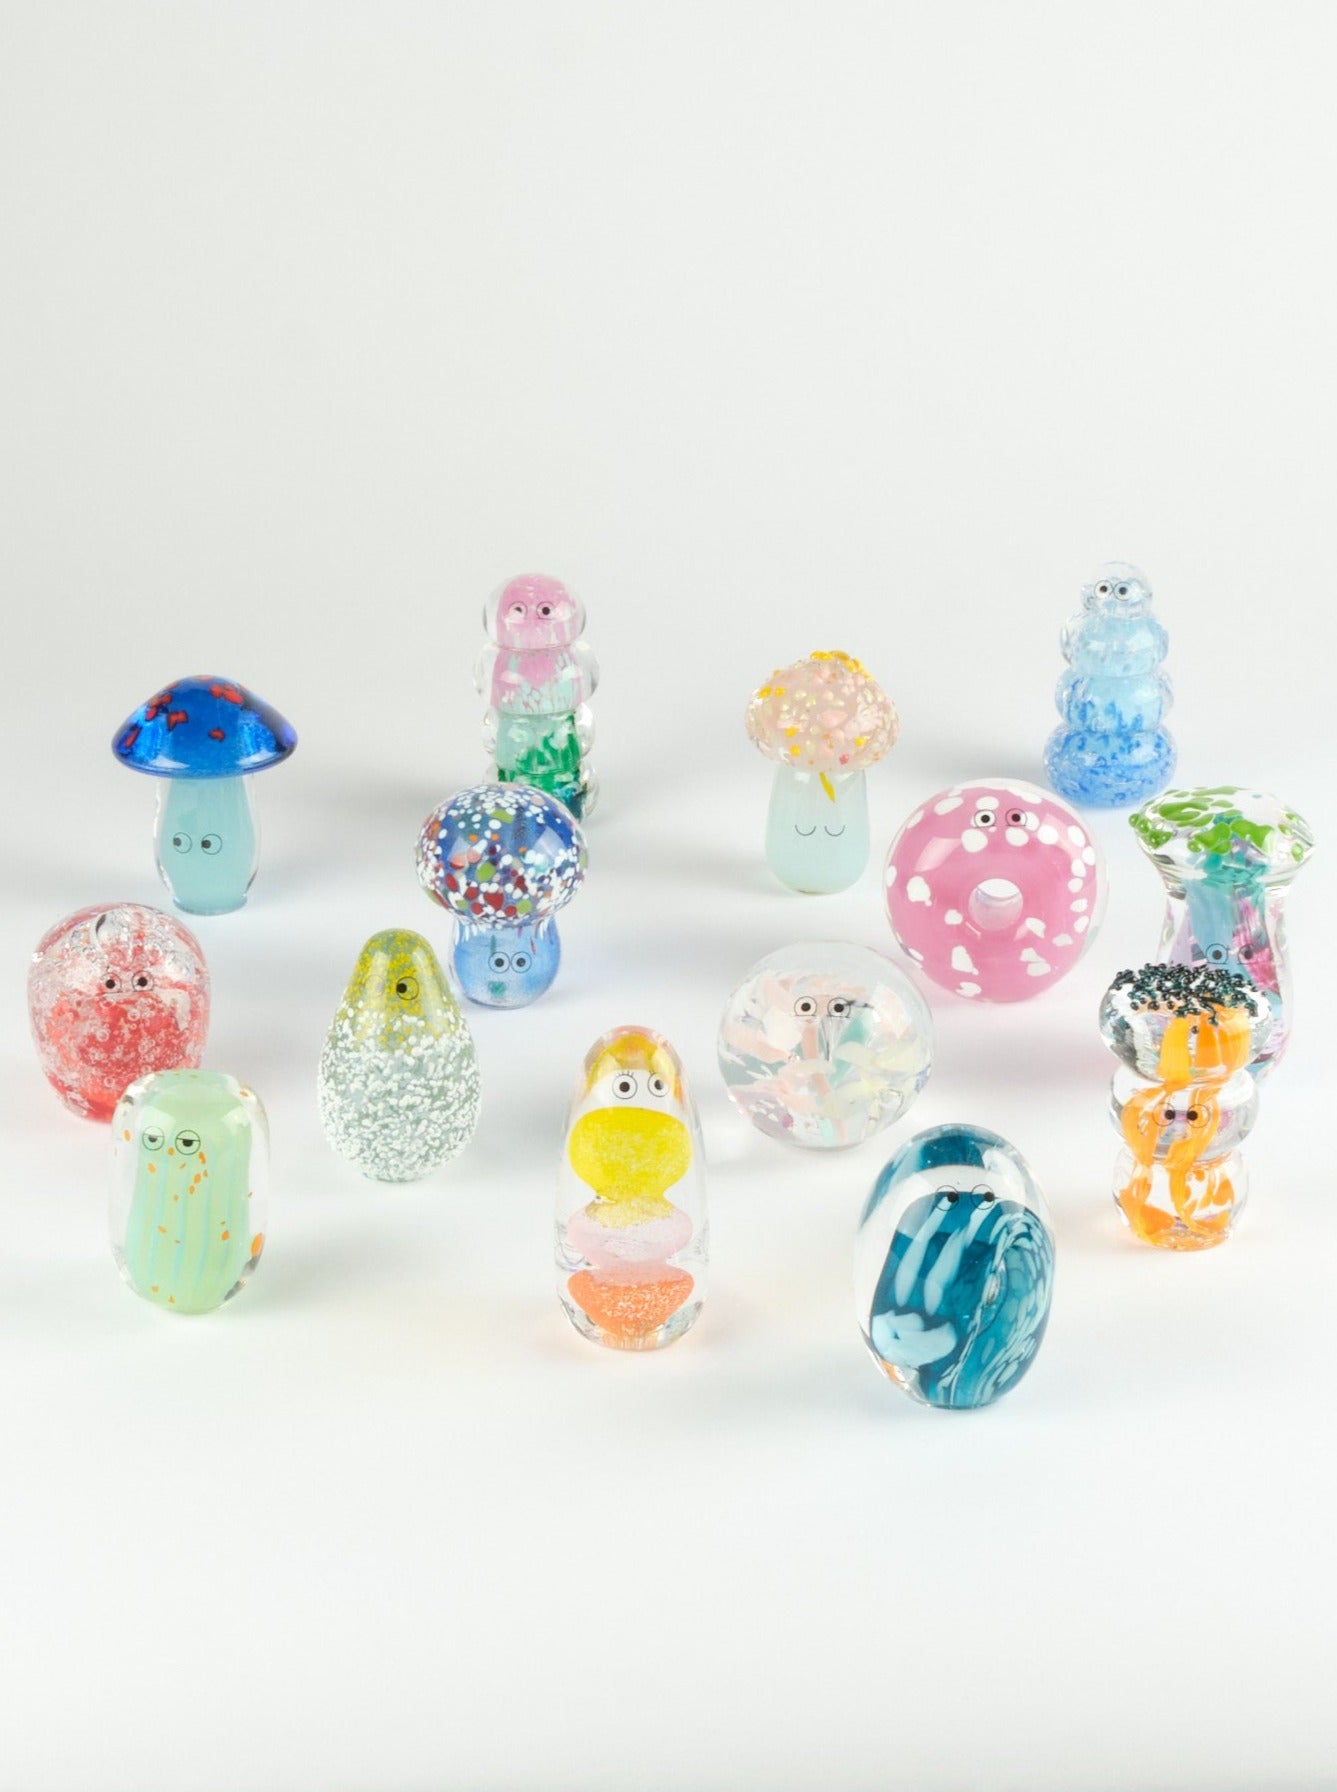 "Crystal Blobs", by Studio Arhoj